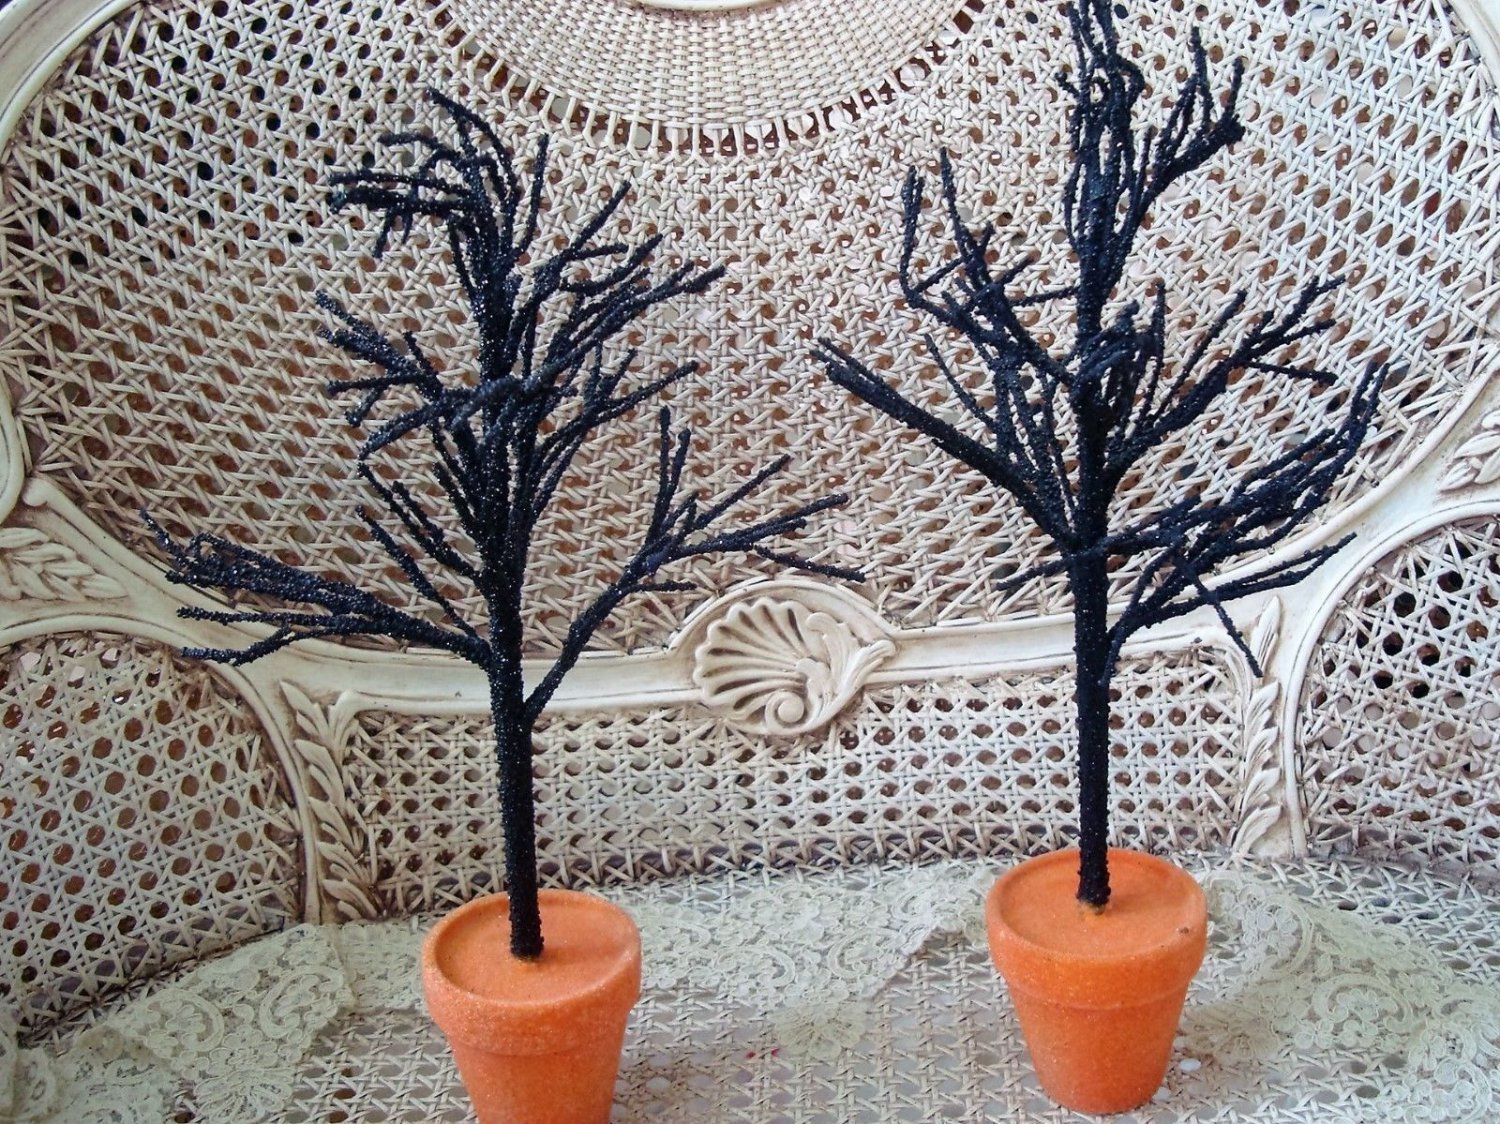 SET OF 2 FABULOUS BLACK WITH ORANGE POTS CREEPY HALLOWEEN TREES